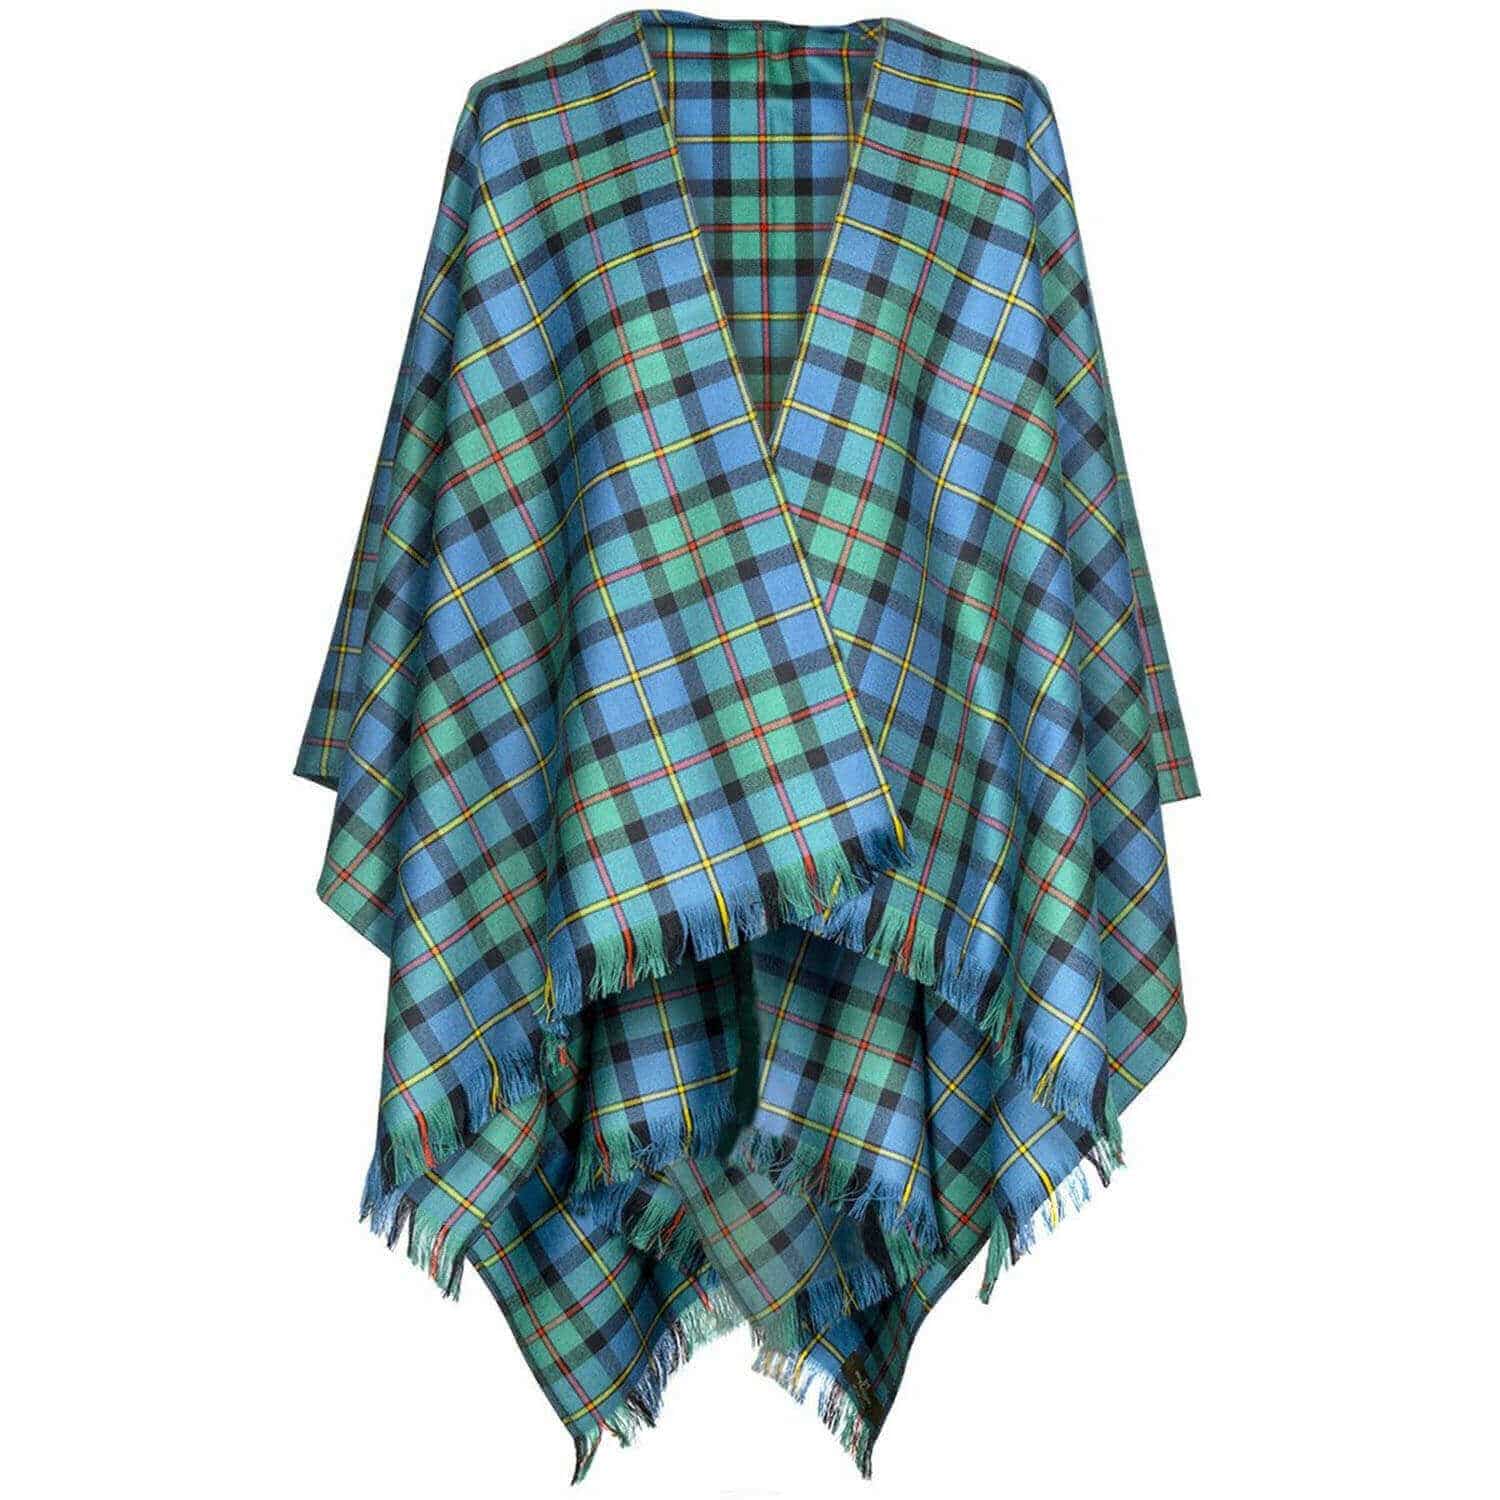 Woven and Made in Scotland Scottish Tartan Shawl Light Weight Premium Wool